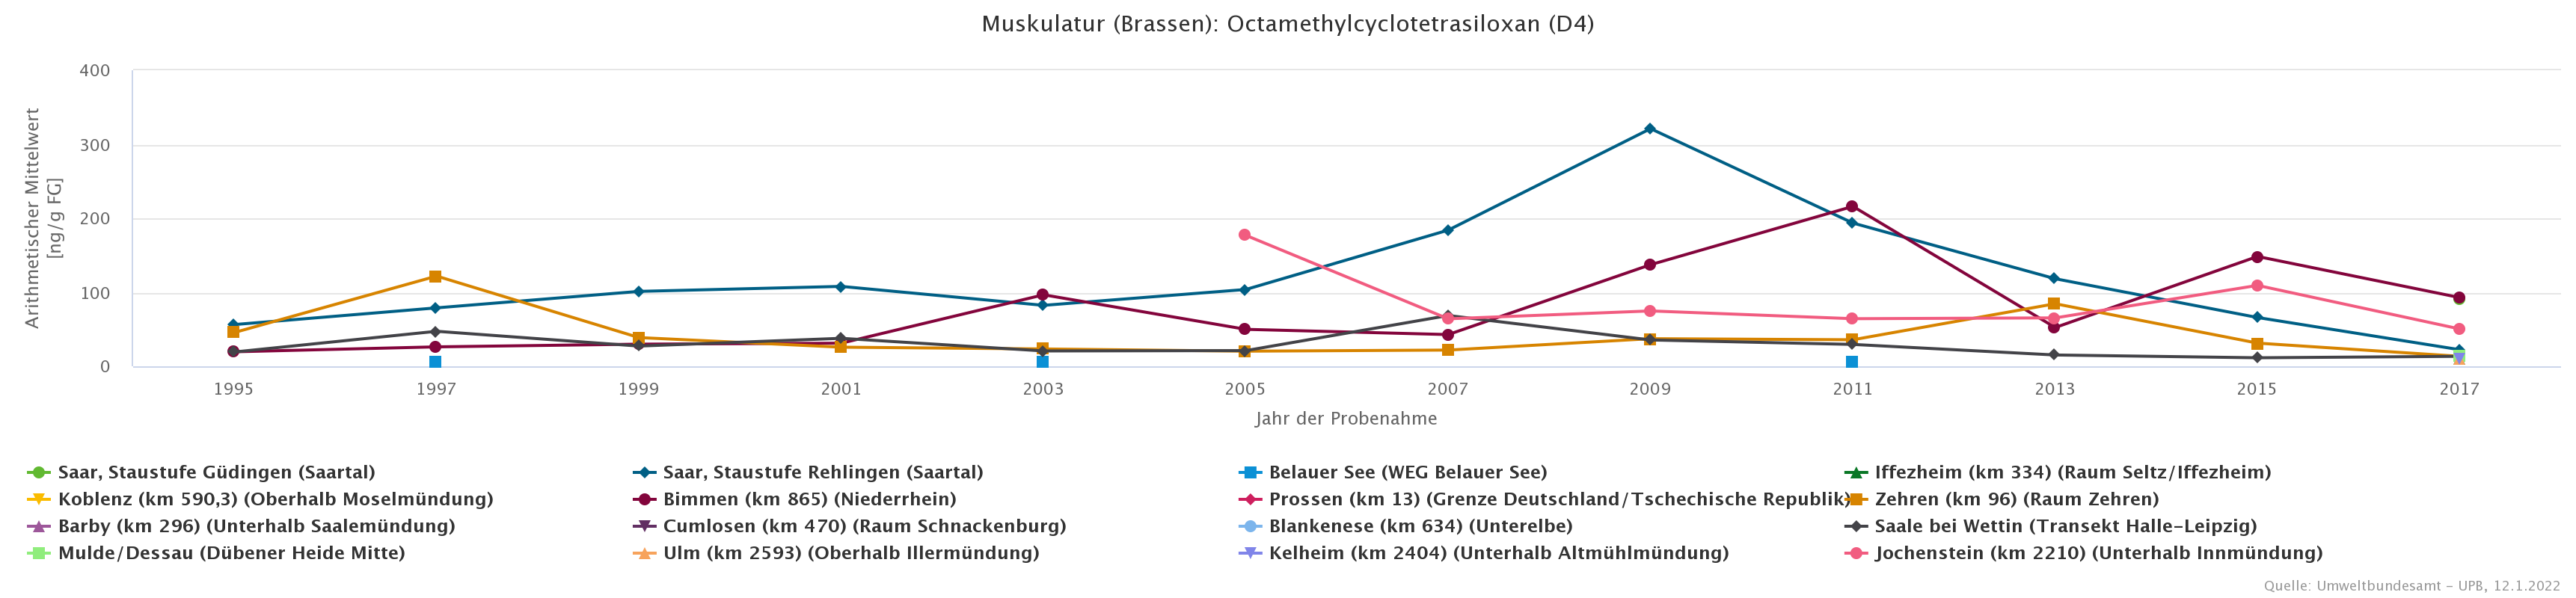 Besonders auffällig hohe Konzentration von Octamethylcyclotetrasiloxan an der Saar-Probenahmefläche Staustufe Rehlingen in 2009.